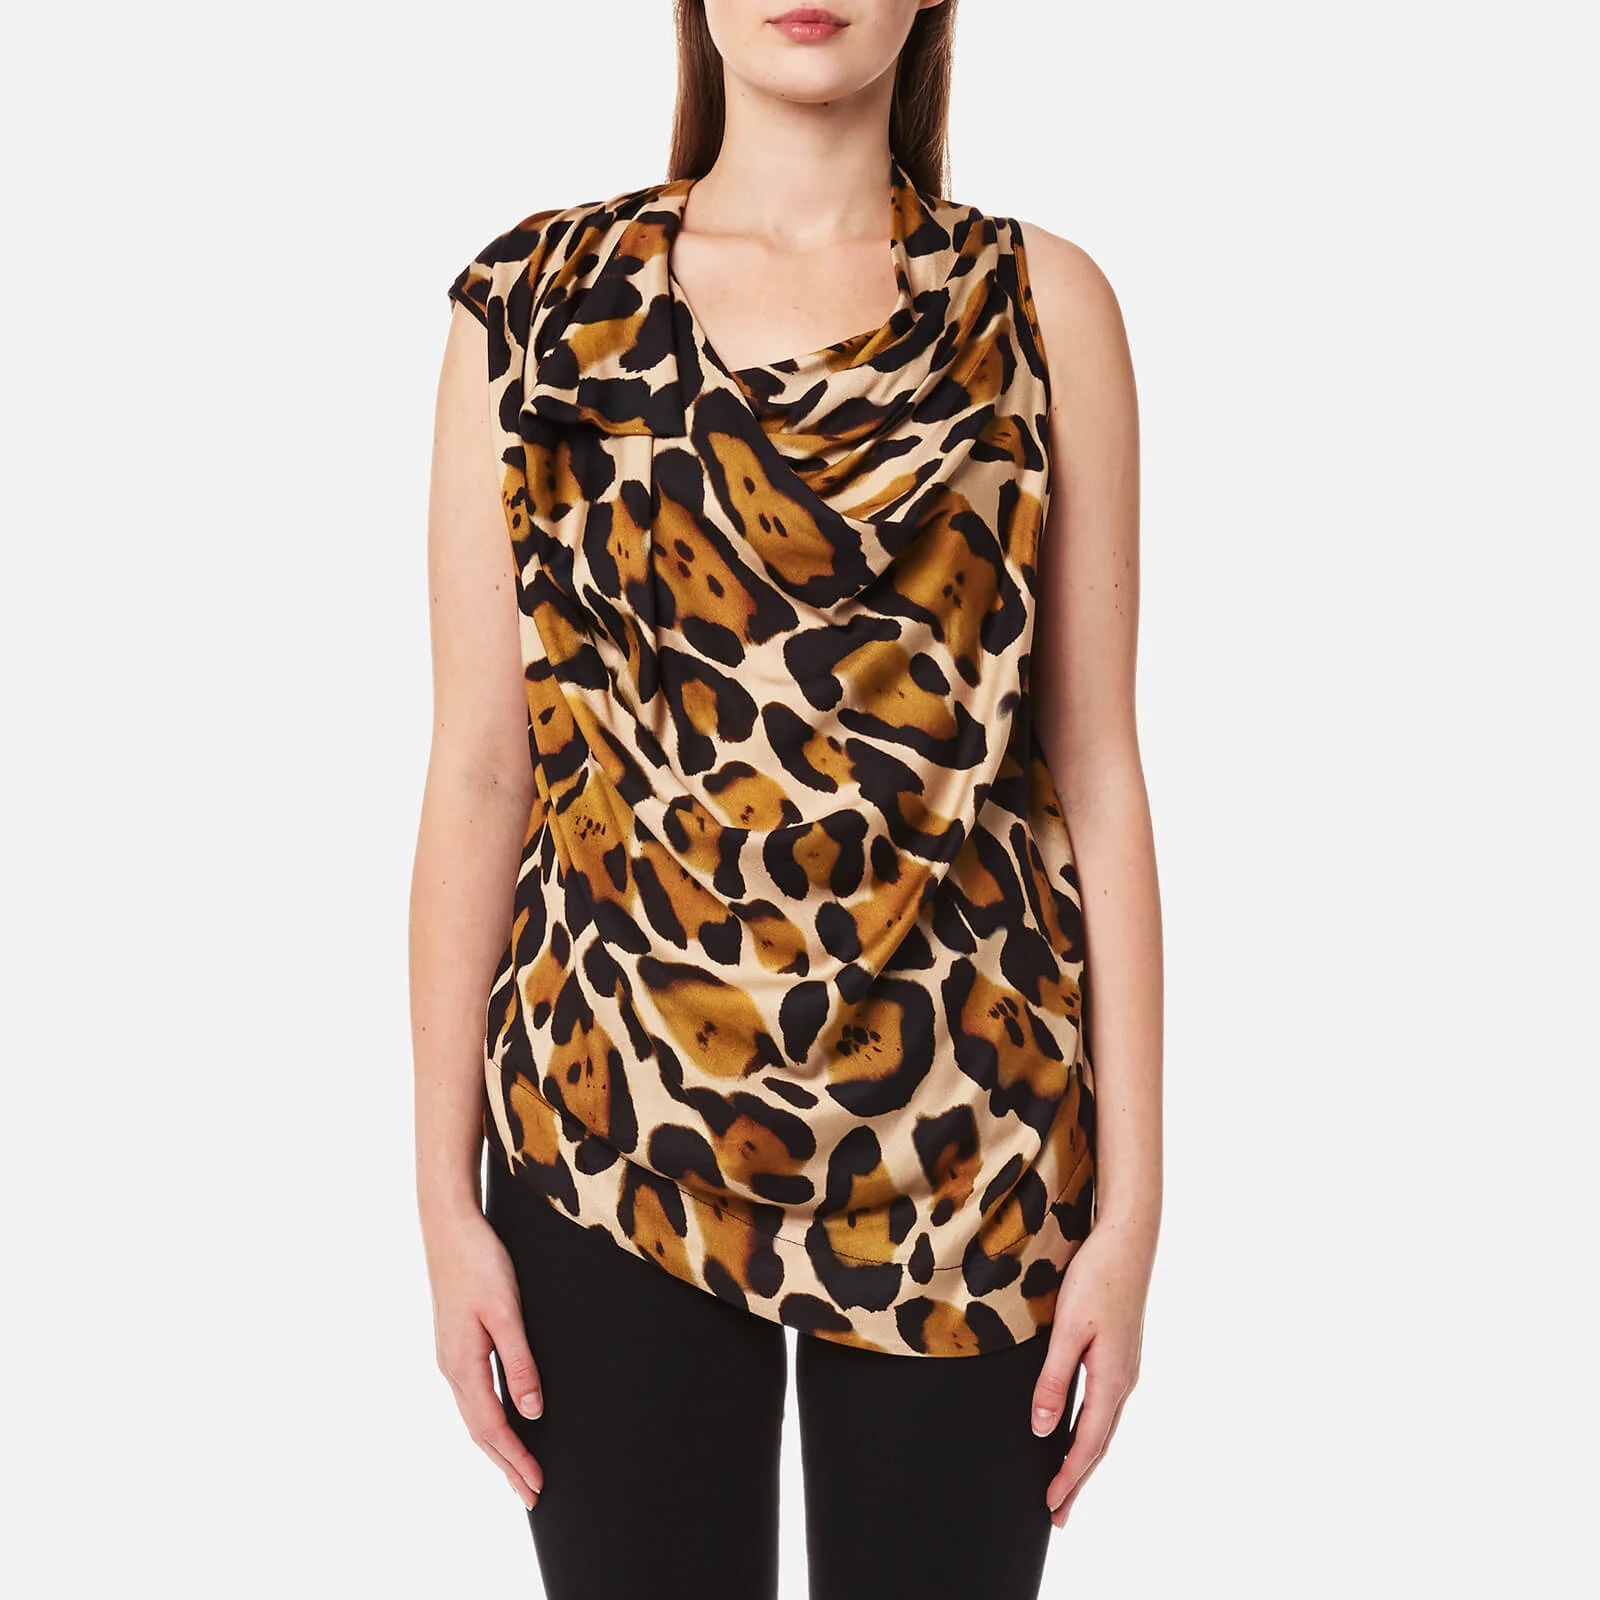 Vivienne Westwood Anglomania Women's Due Blouse - Leopard Image 1